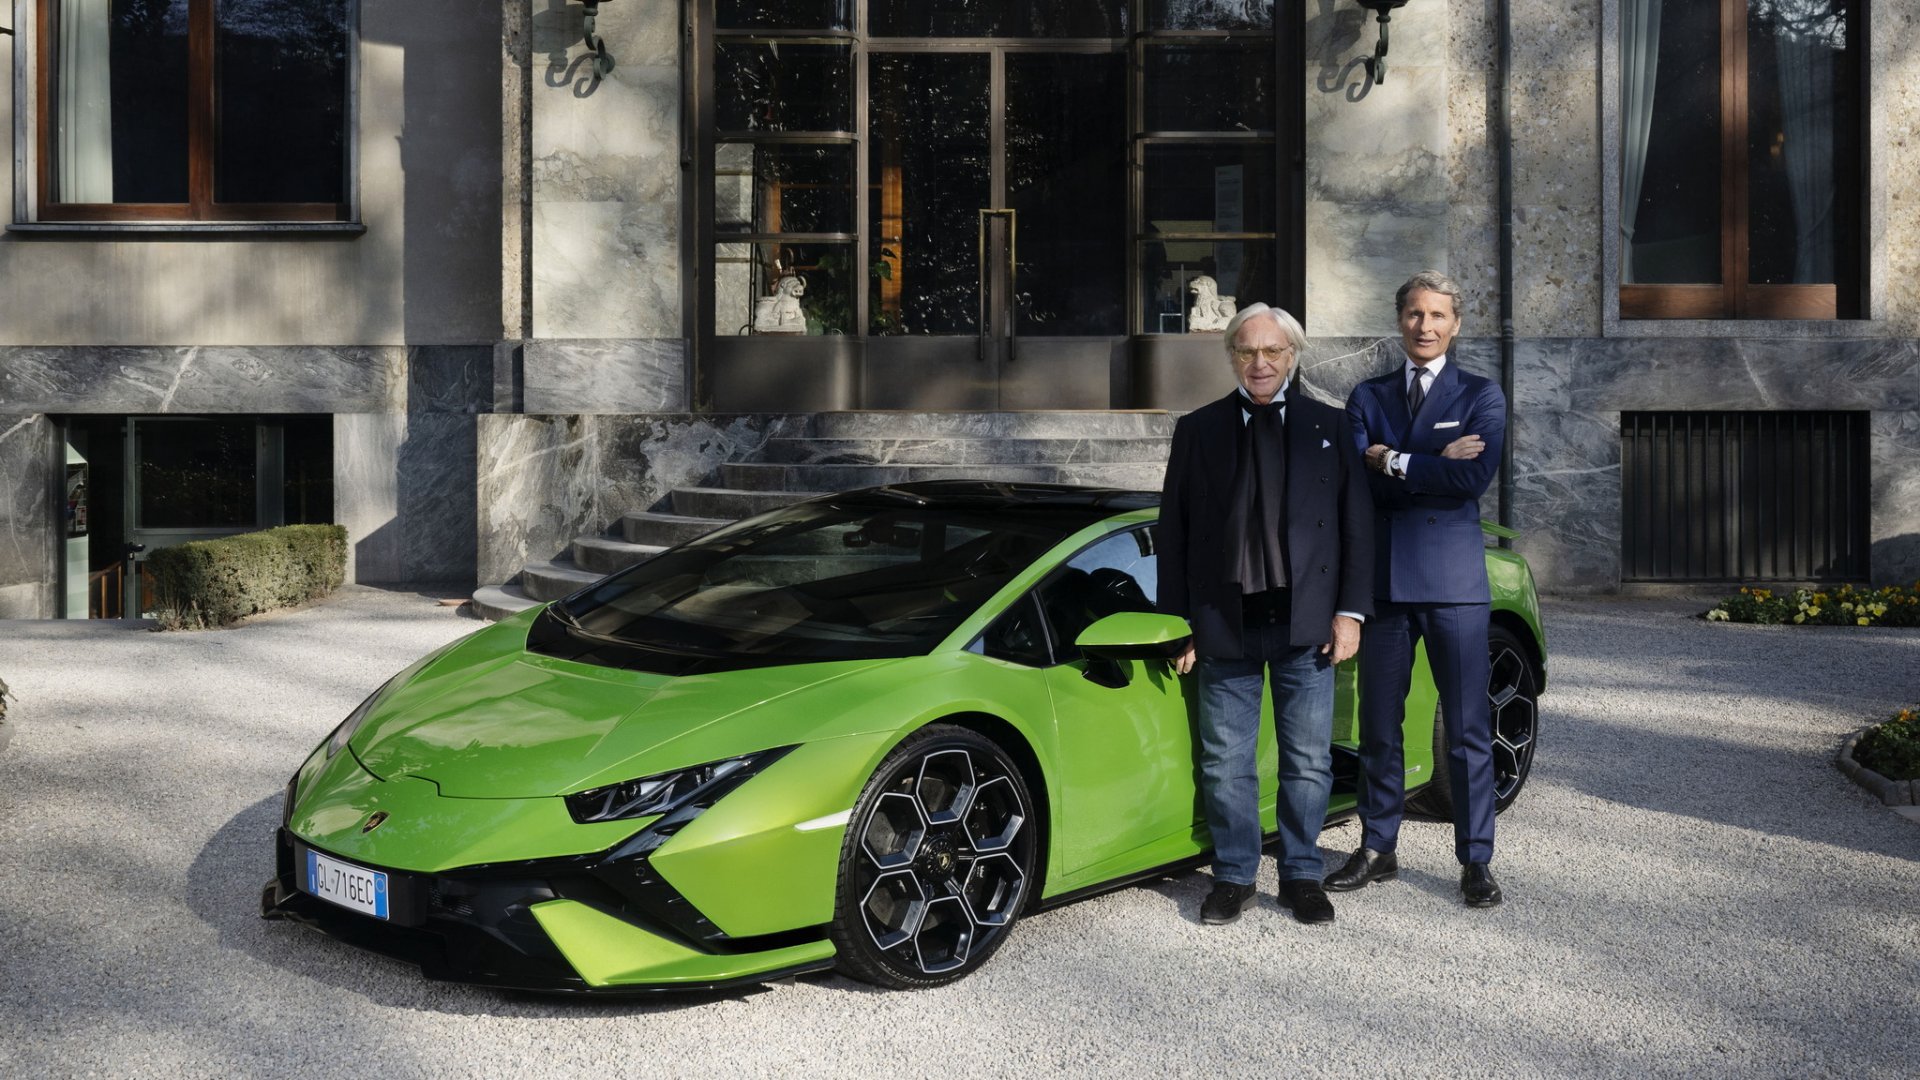 Lamborghini และ Tod’s แบรนด์เครื่องหนังระดับหรูจากอิตาลี ประกาศความร่วมมืออย่างเป็นทางการ